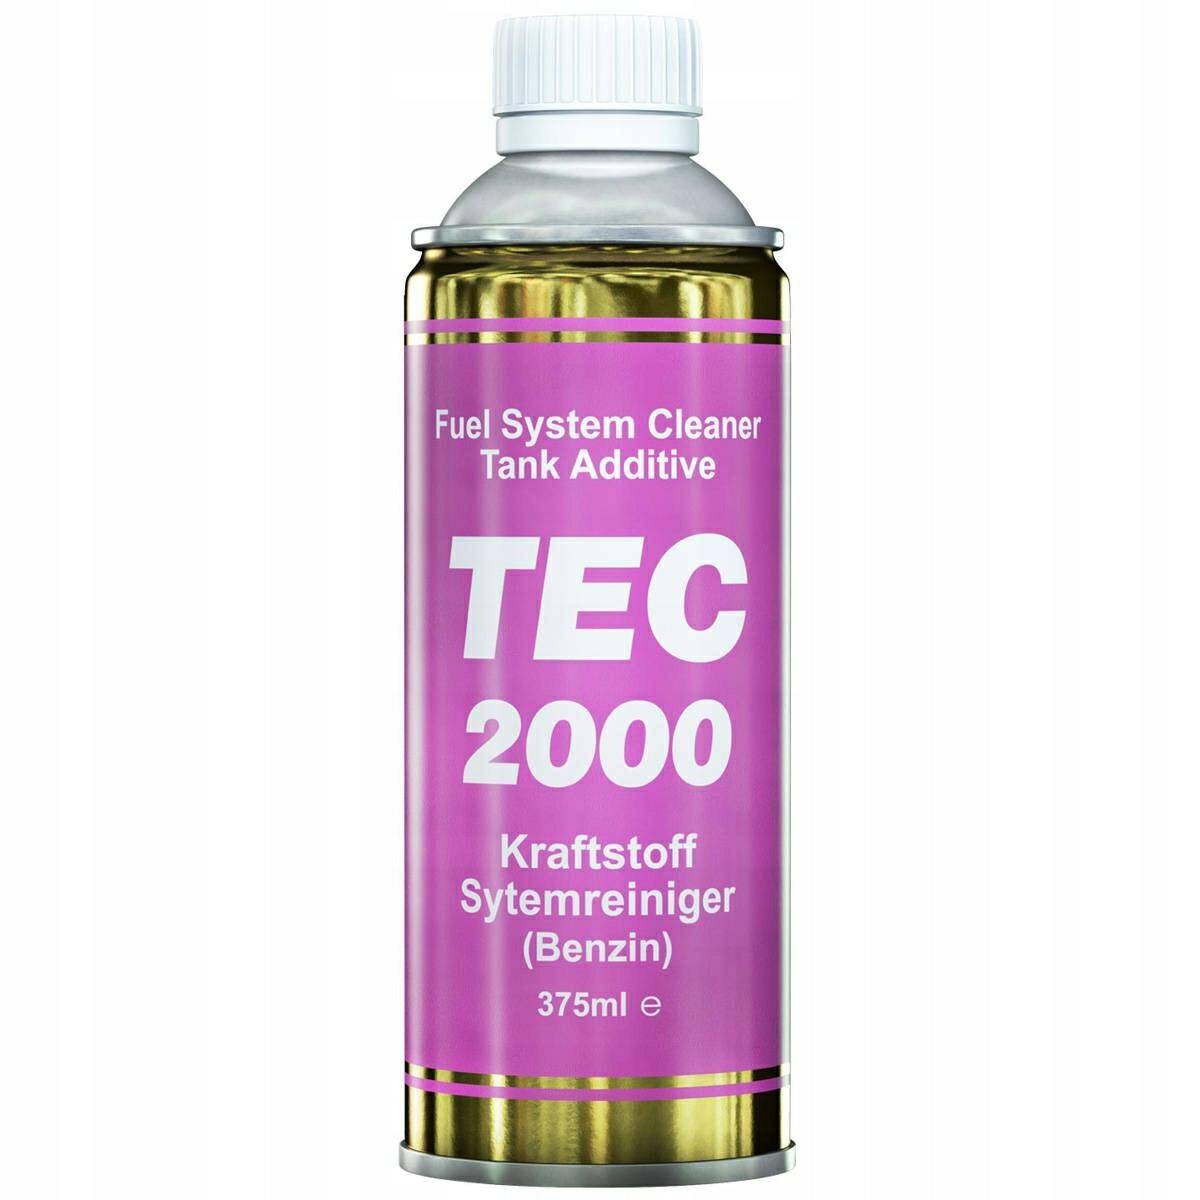 TEC 2000 Fuel System Cleaner Dodatek do Benzyny 375ml